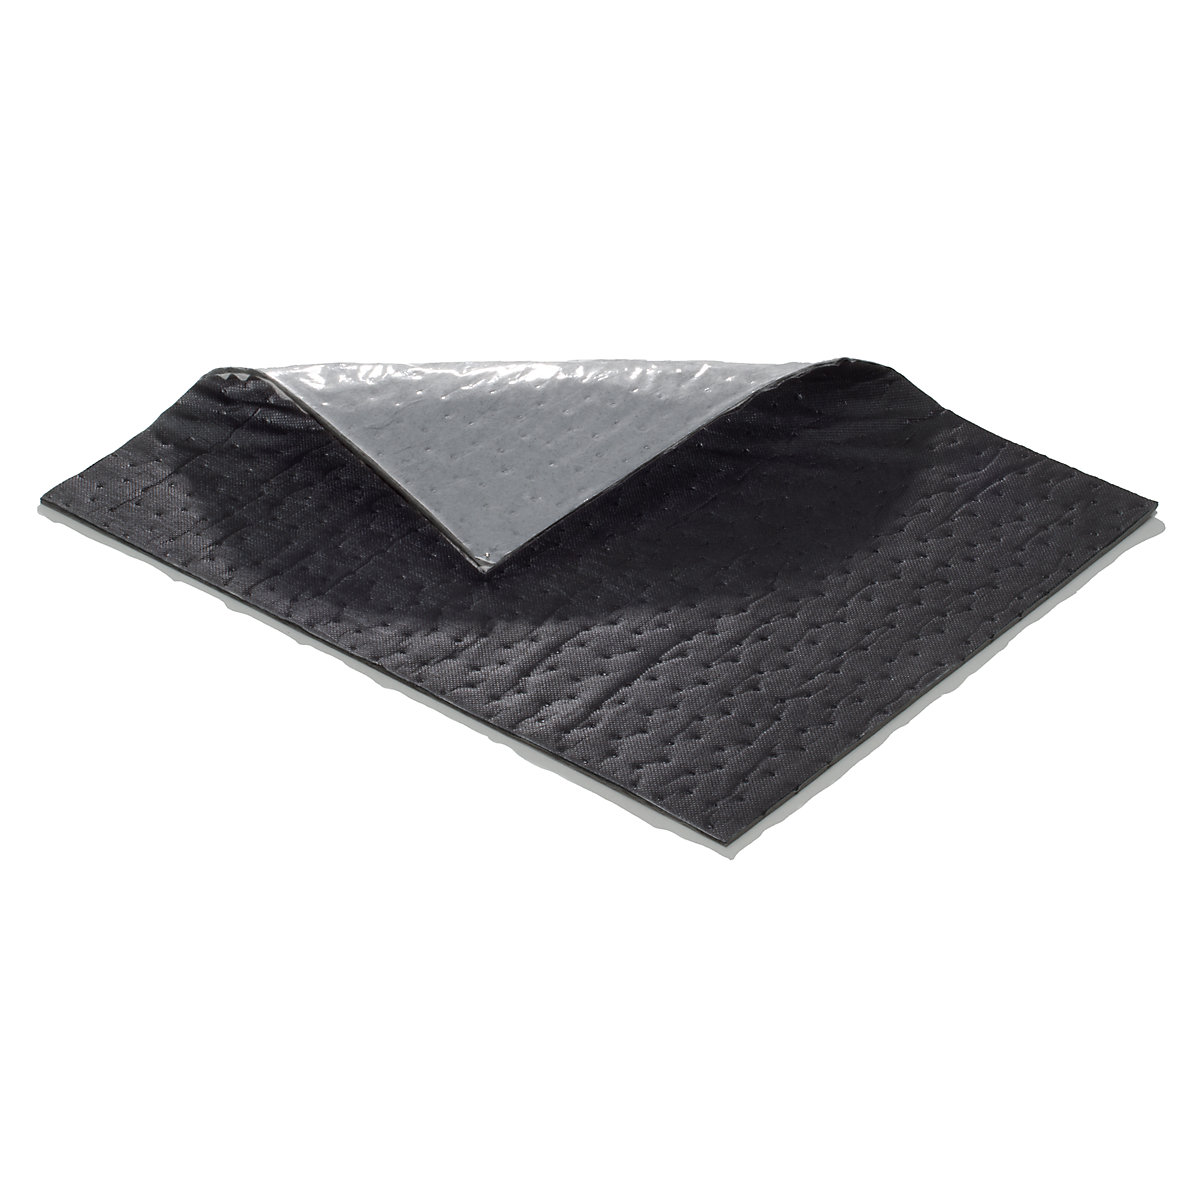 PRO Plus universal absorbent sheeting